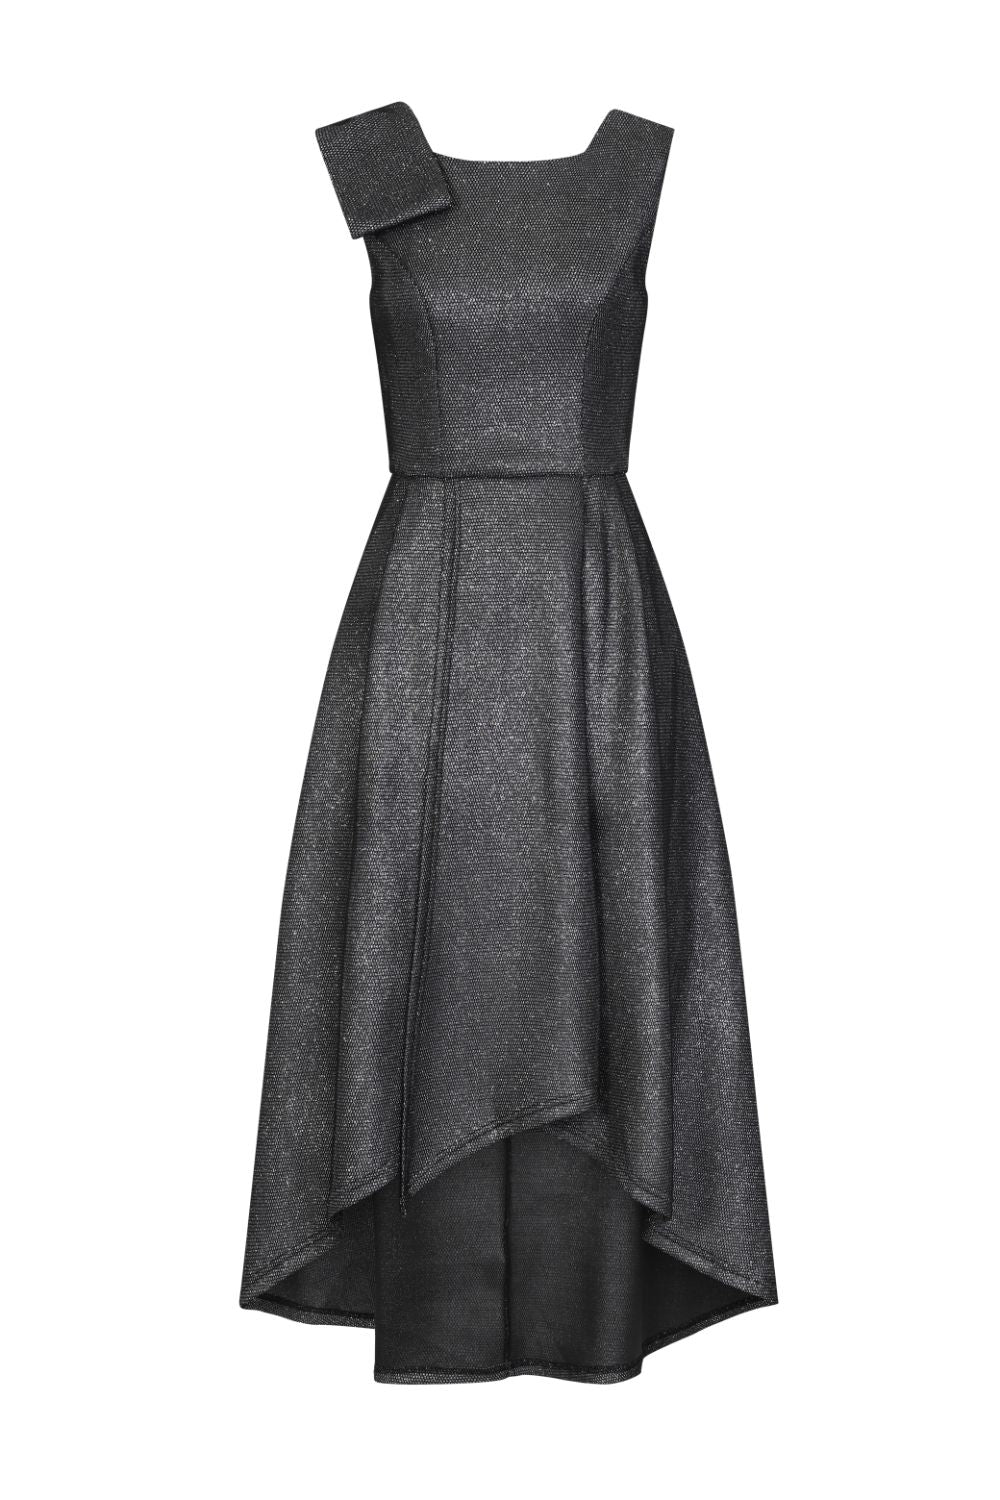 Riviera Black Glitter Sparkle Asymmetric Dip Hem Dress